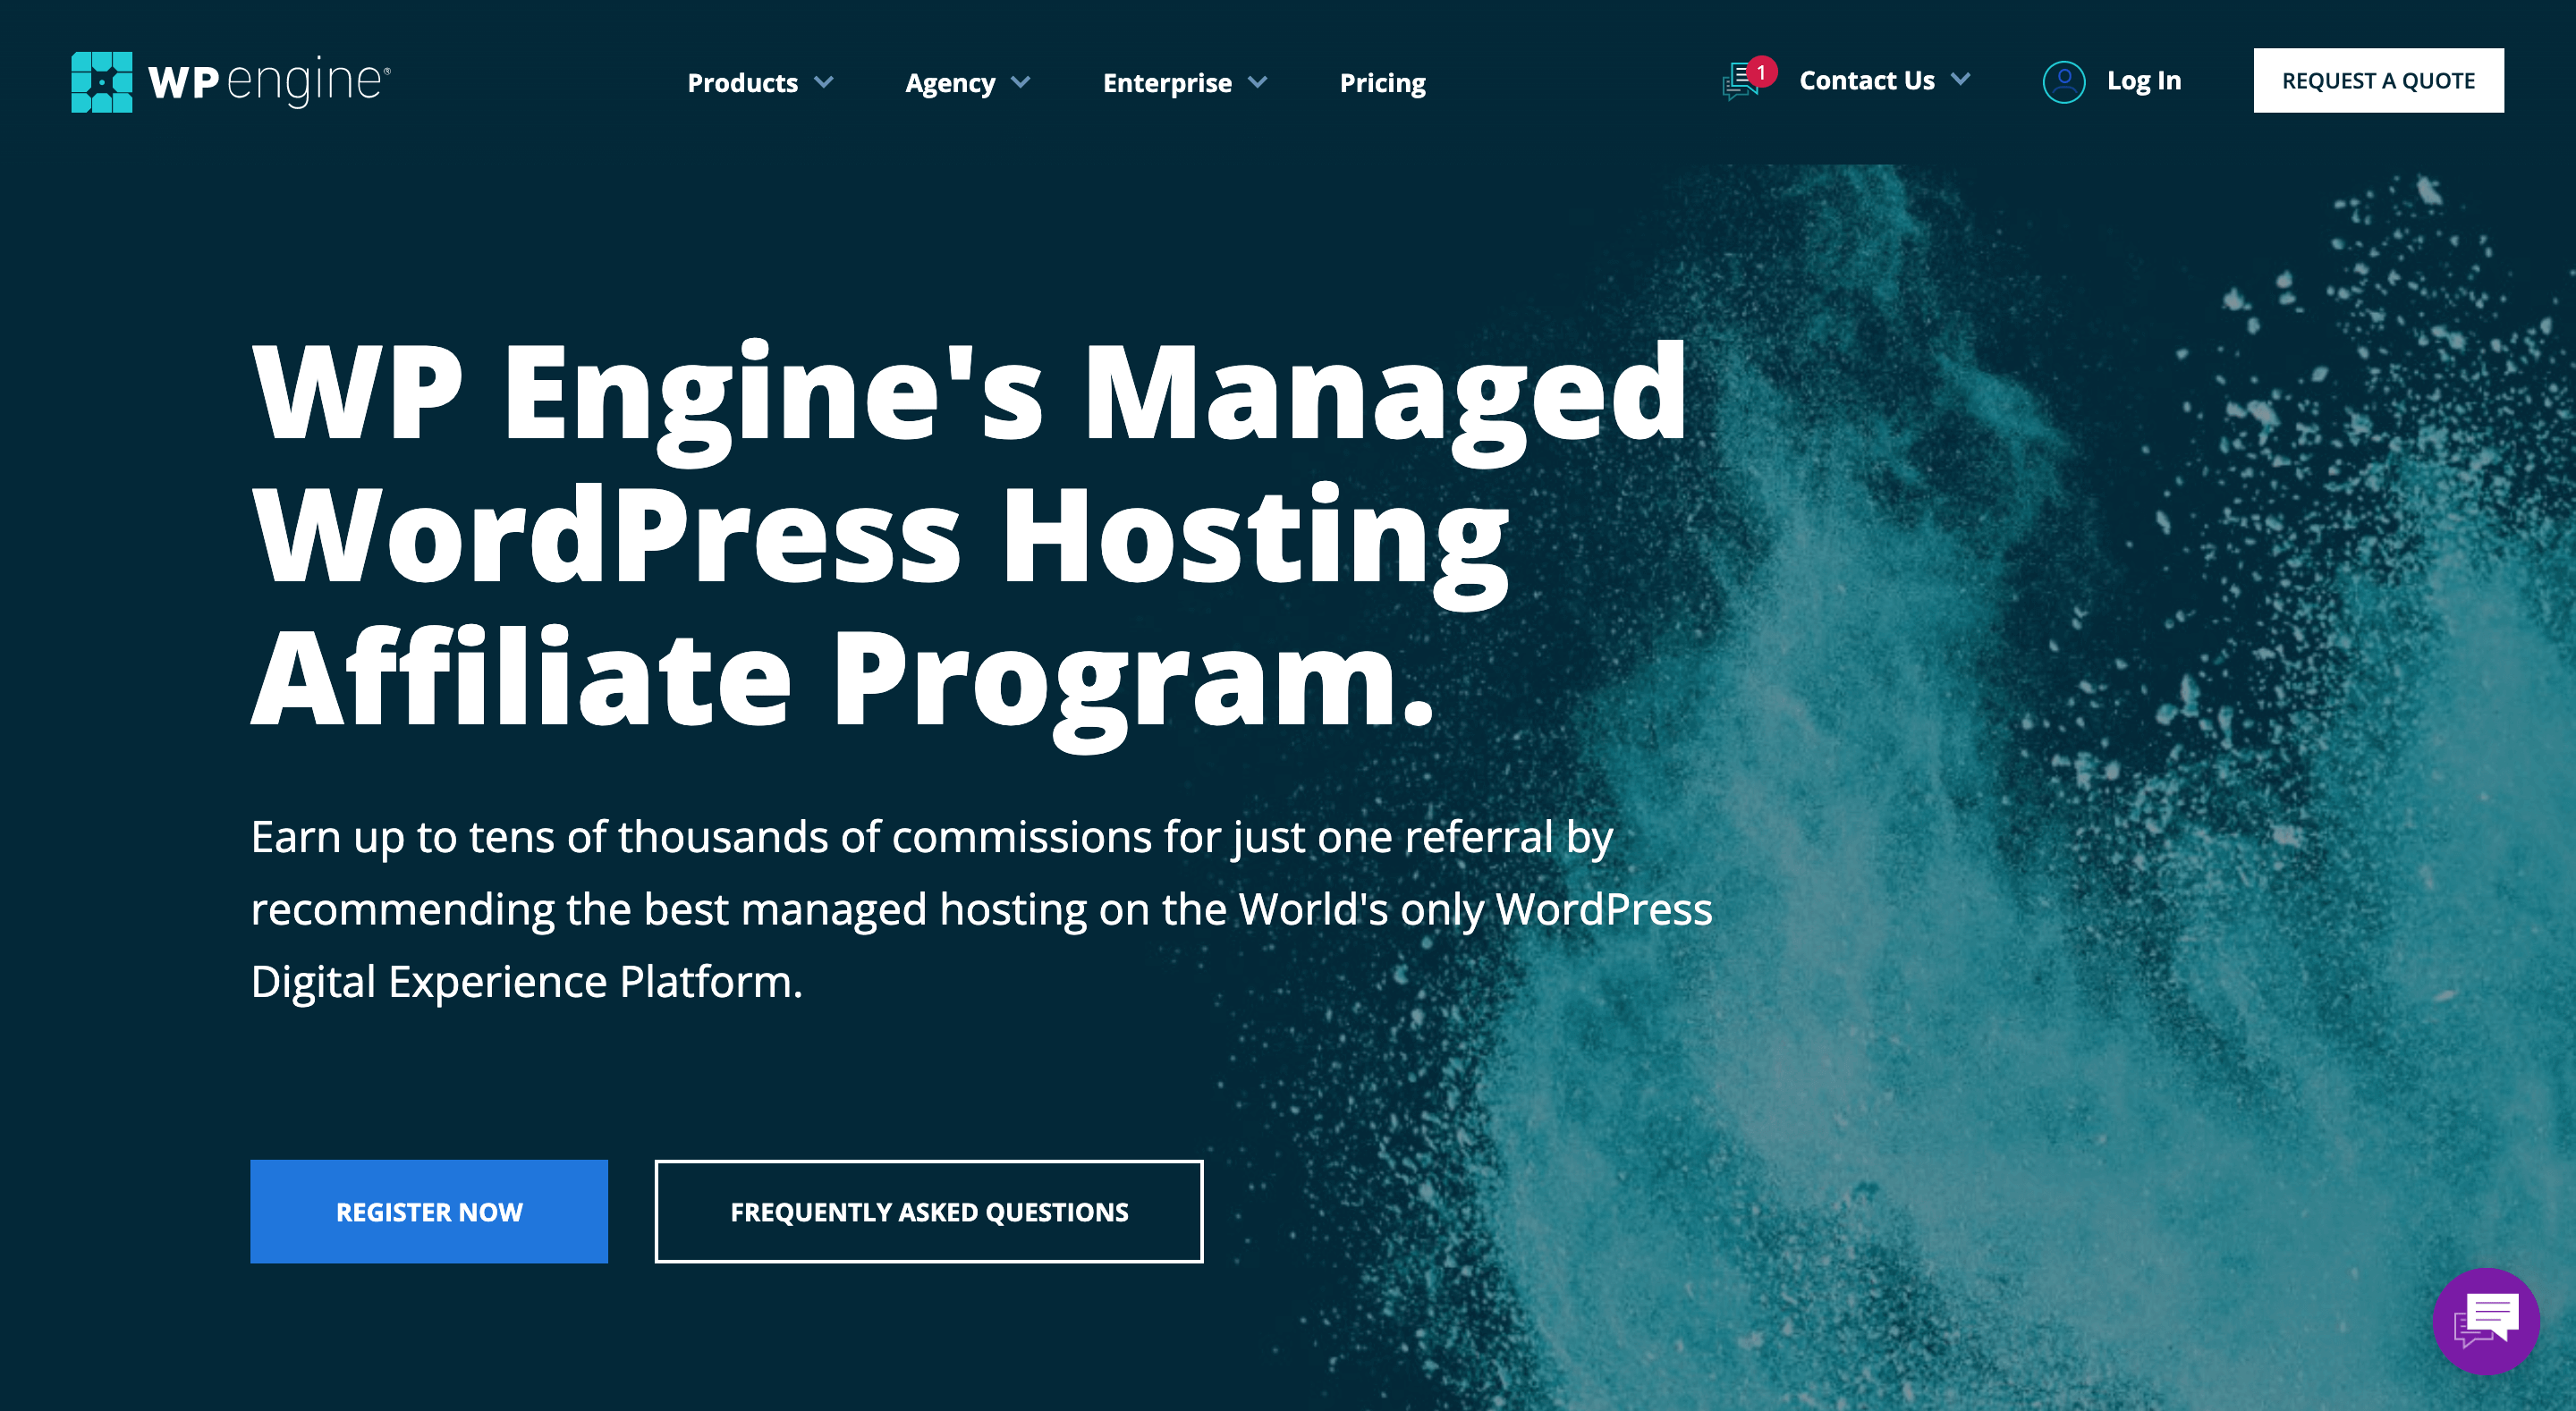 WP Engine's Affiliate Program